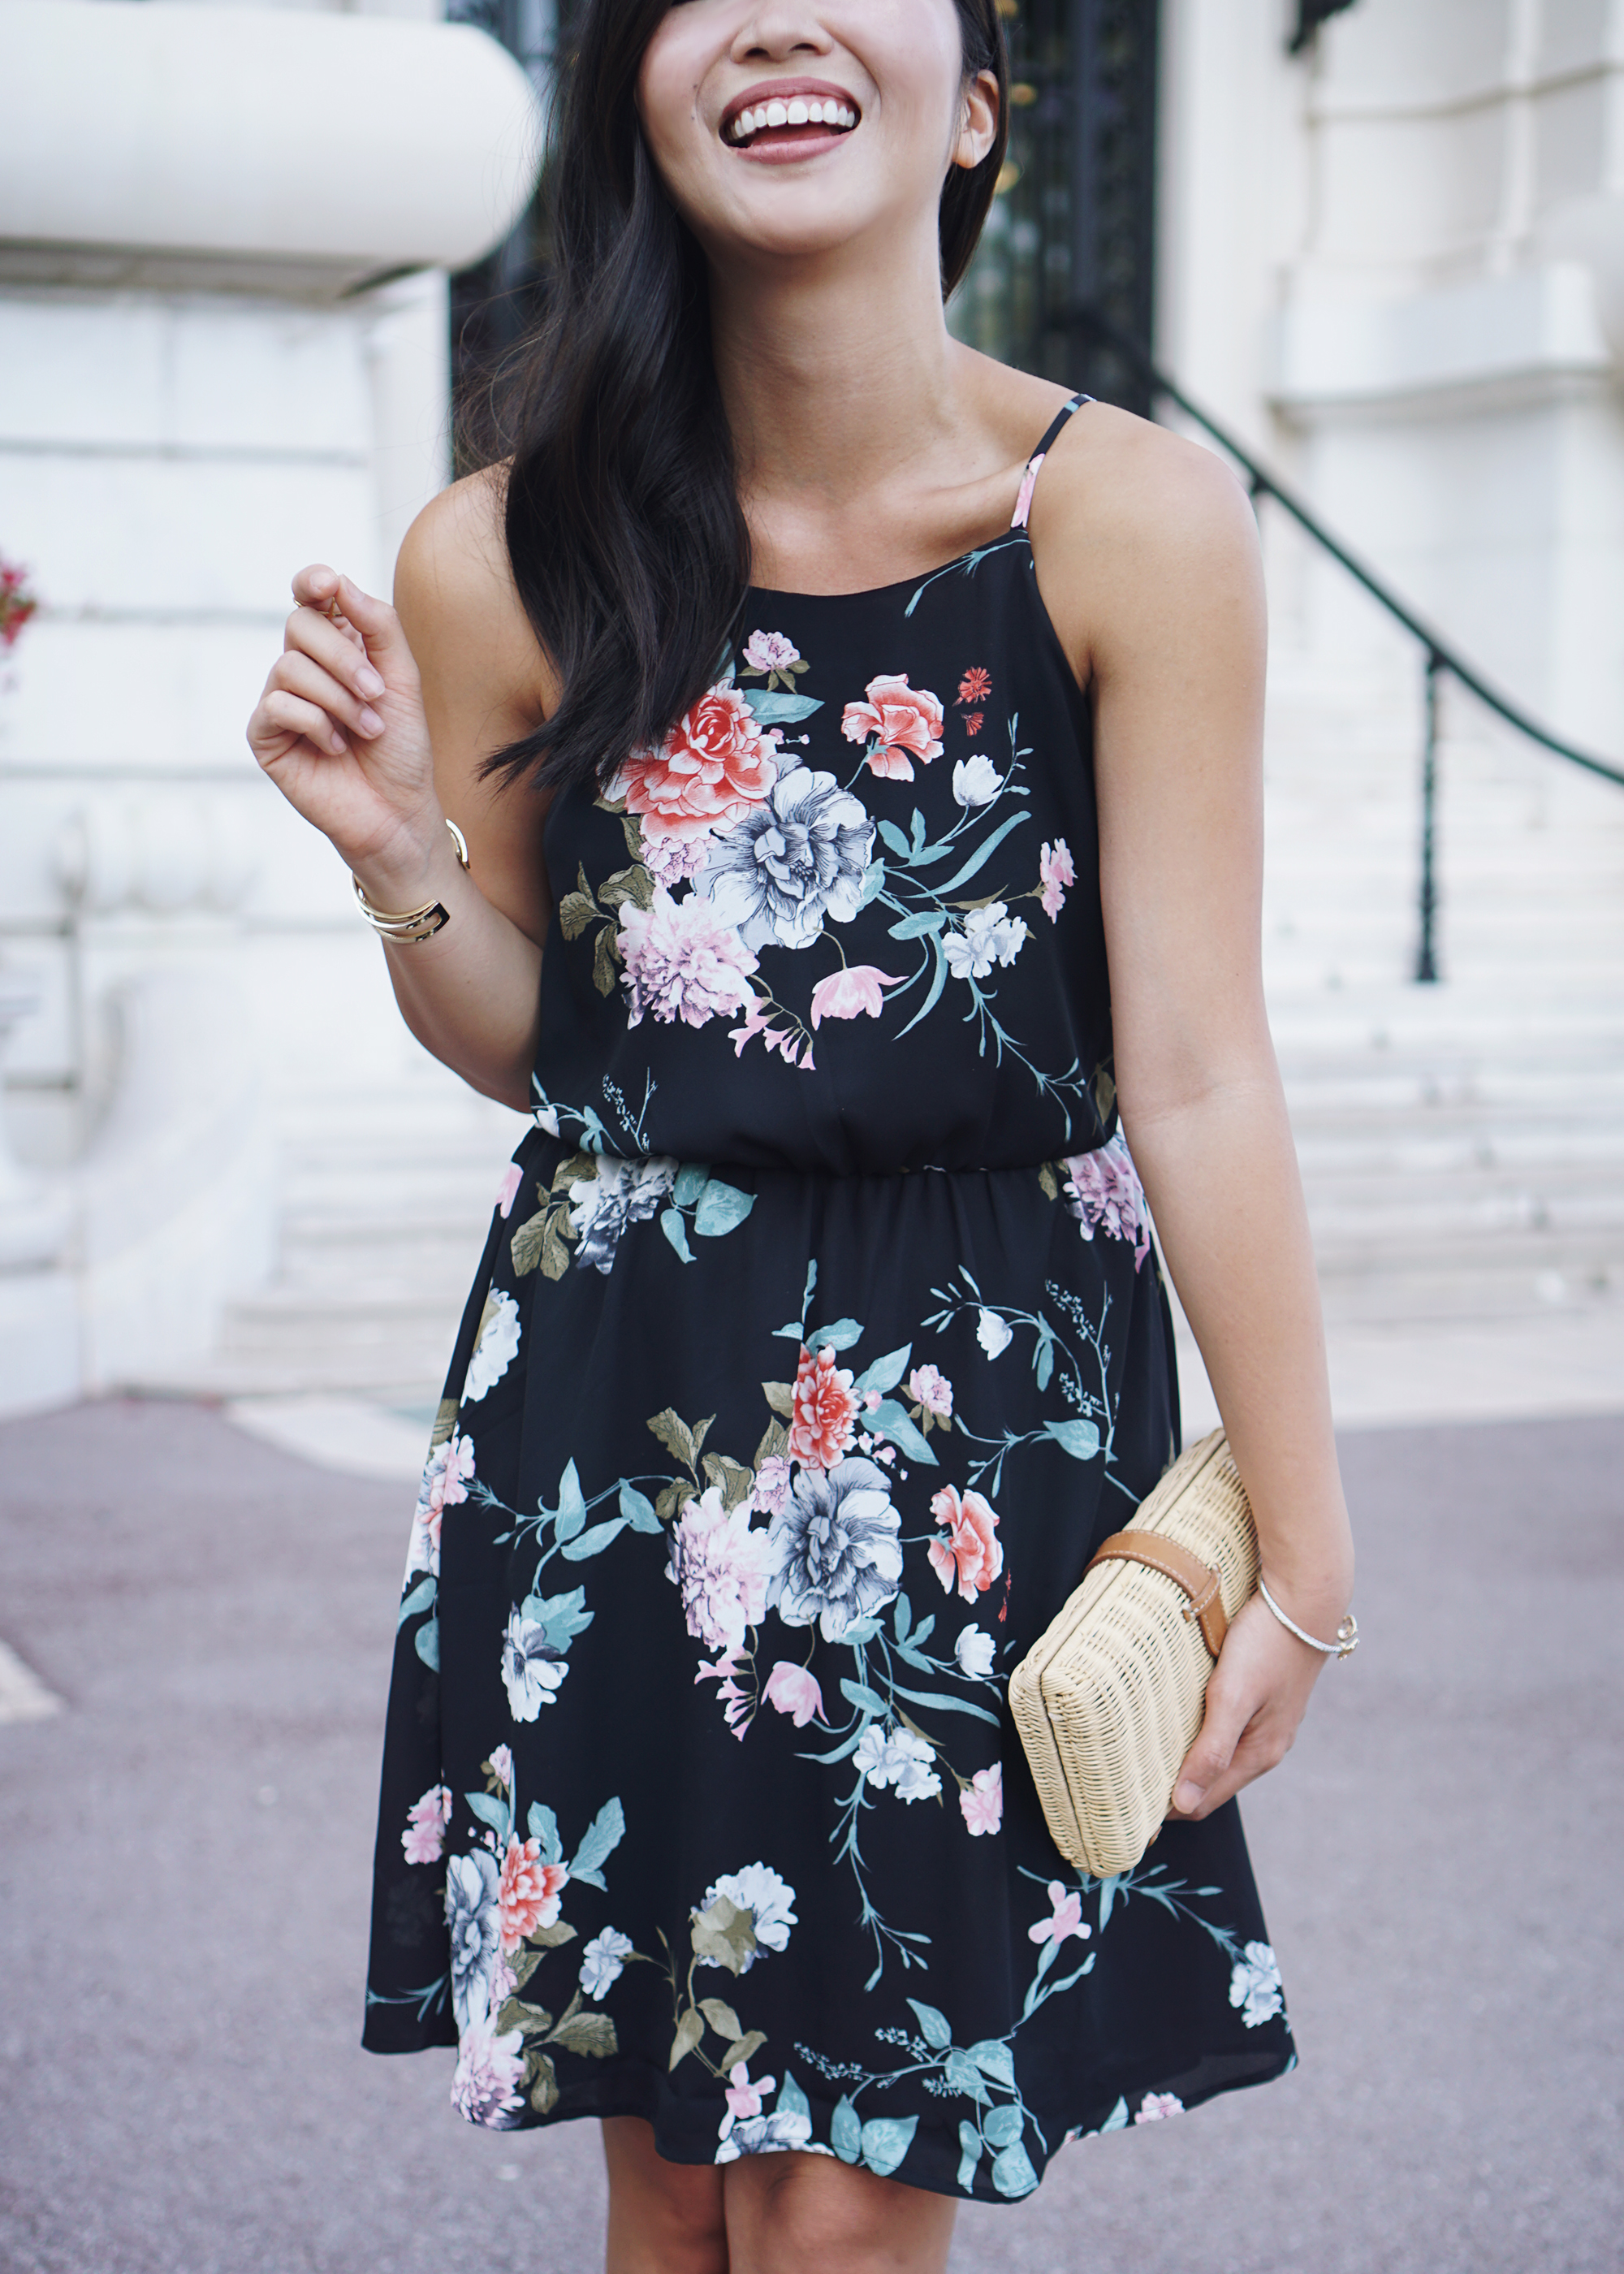 Summer Outfit Inspiration: Black Floral Print Dress